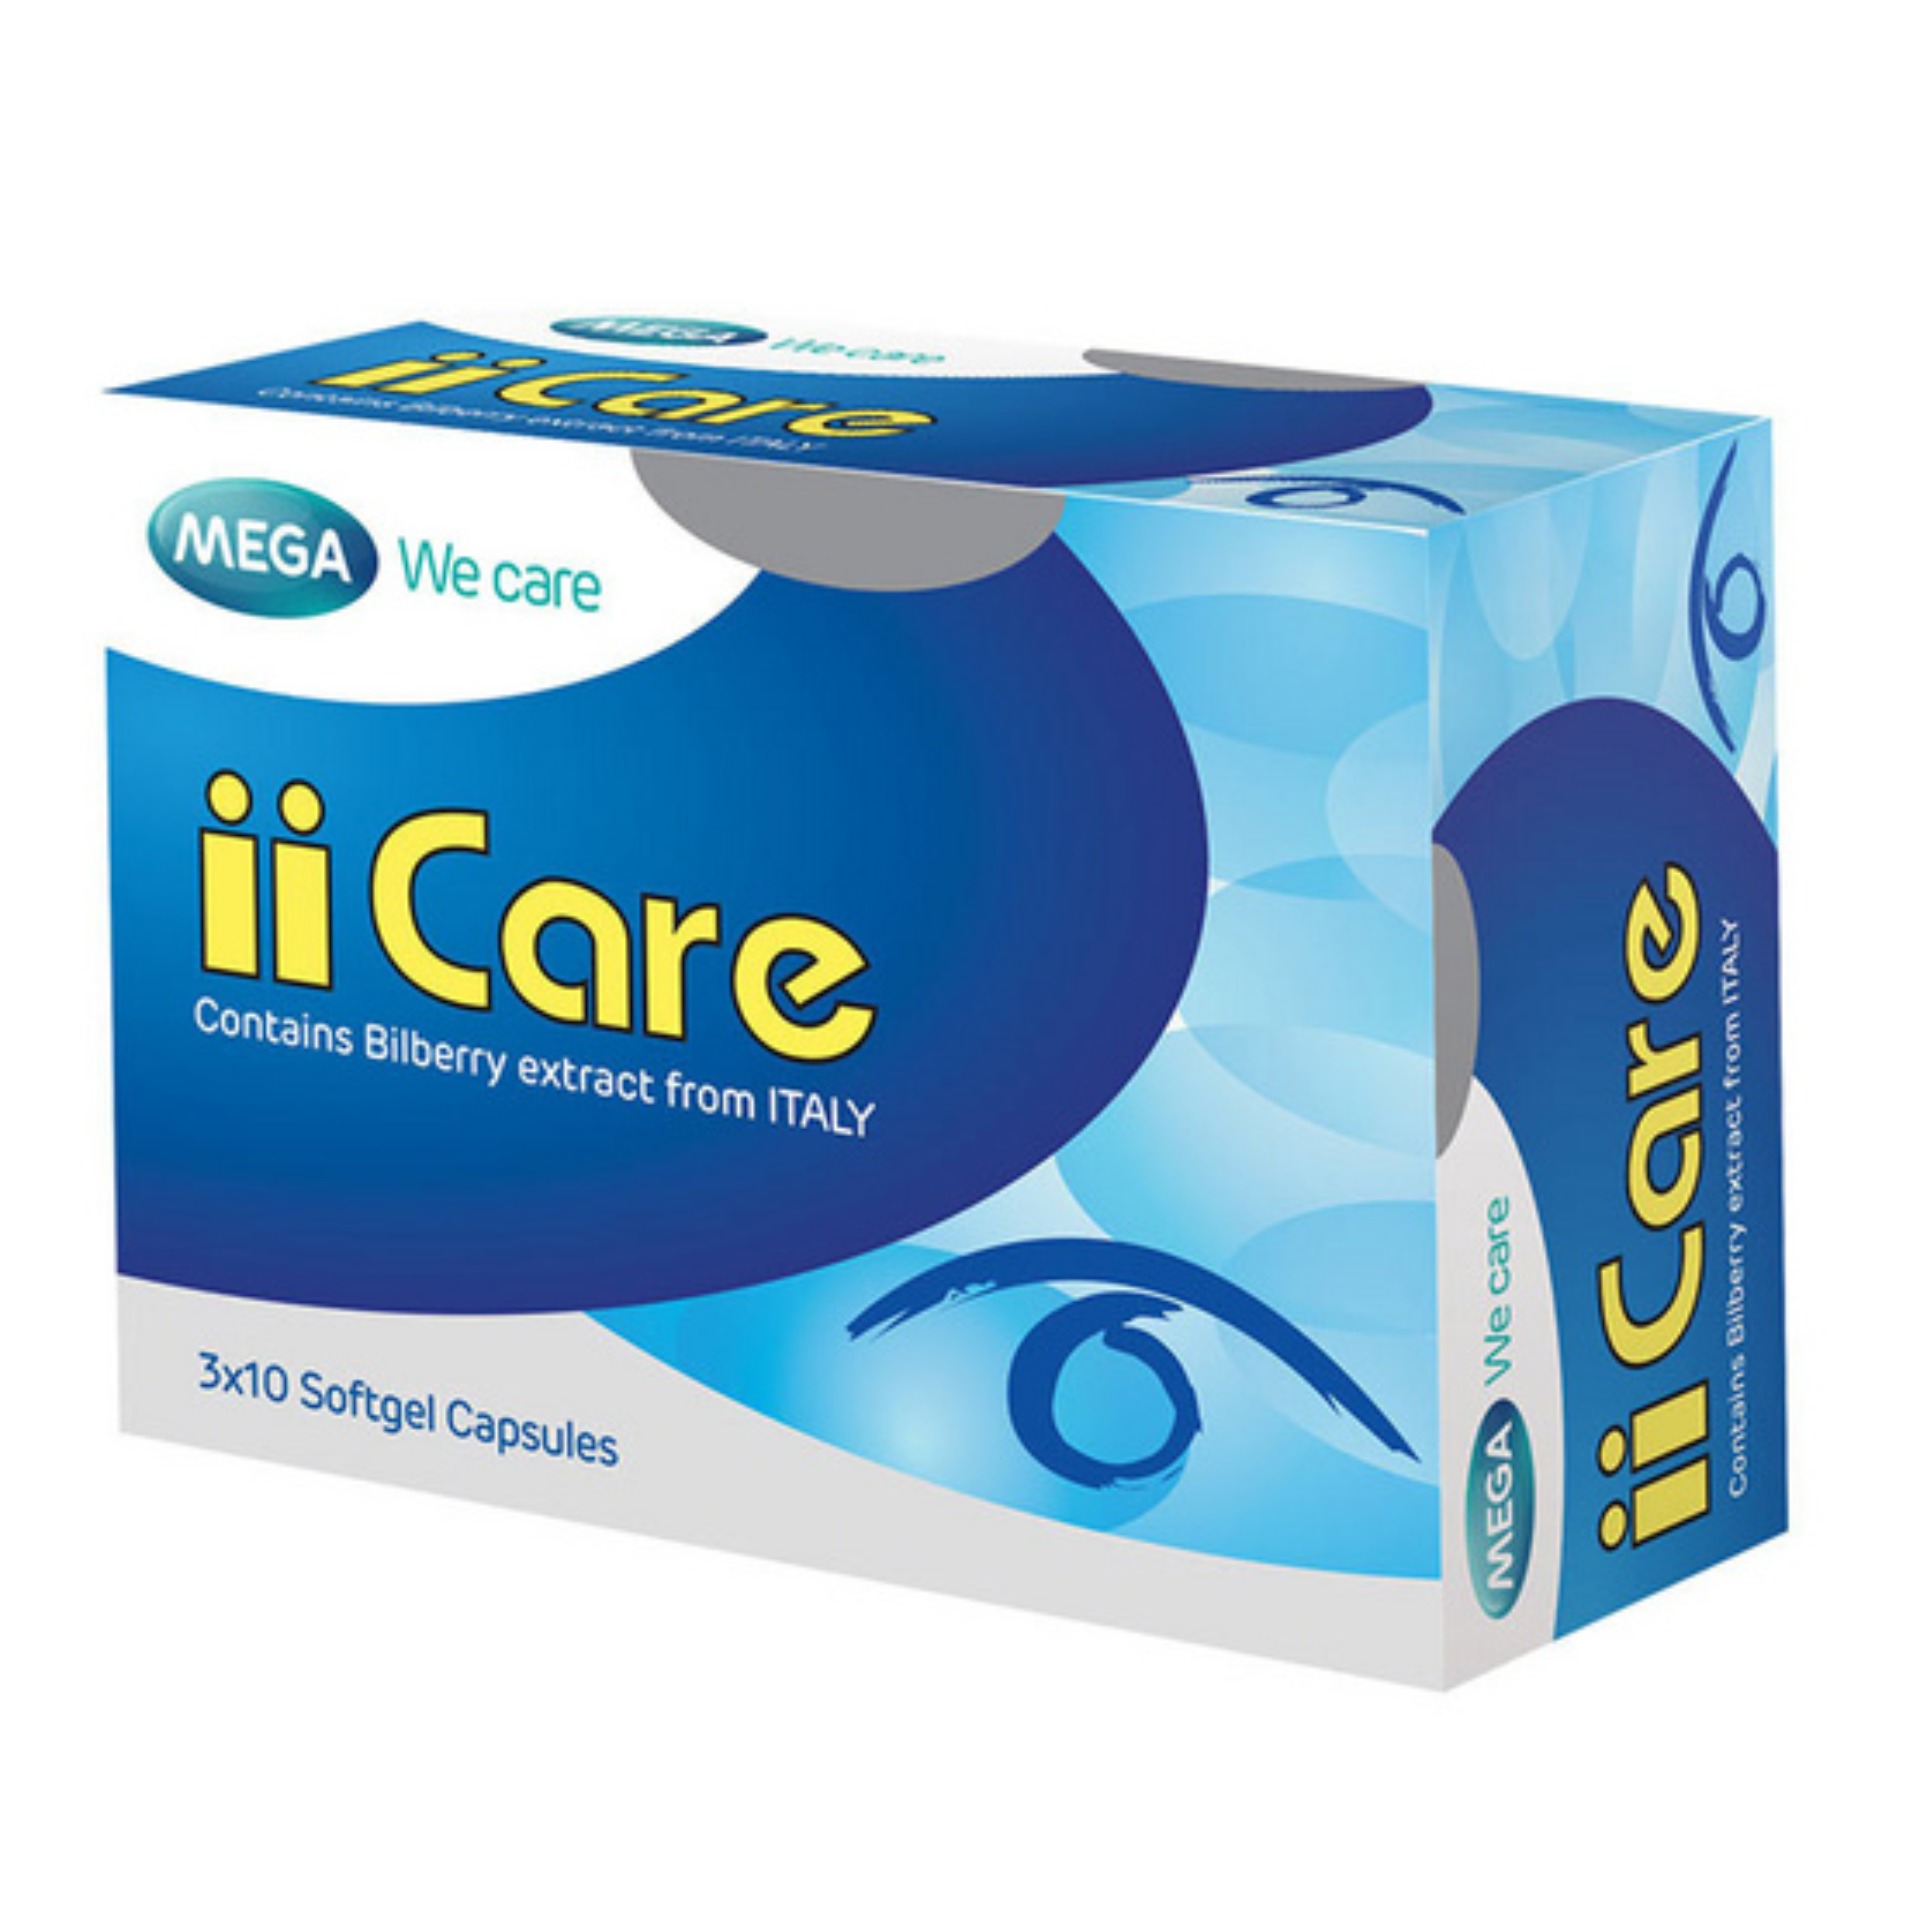 Mega ii care ไอไอแคร์ ผลิตภัณฑ์เสริมอาหารบำรุงสายตา ด้วยคุณค่าสารสกัดจาก ลูทีน และ บิลเบอร์รี่ 30 แคปซูล/กล่อง (1 กล่อง)